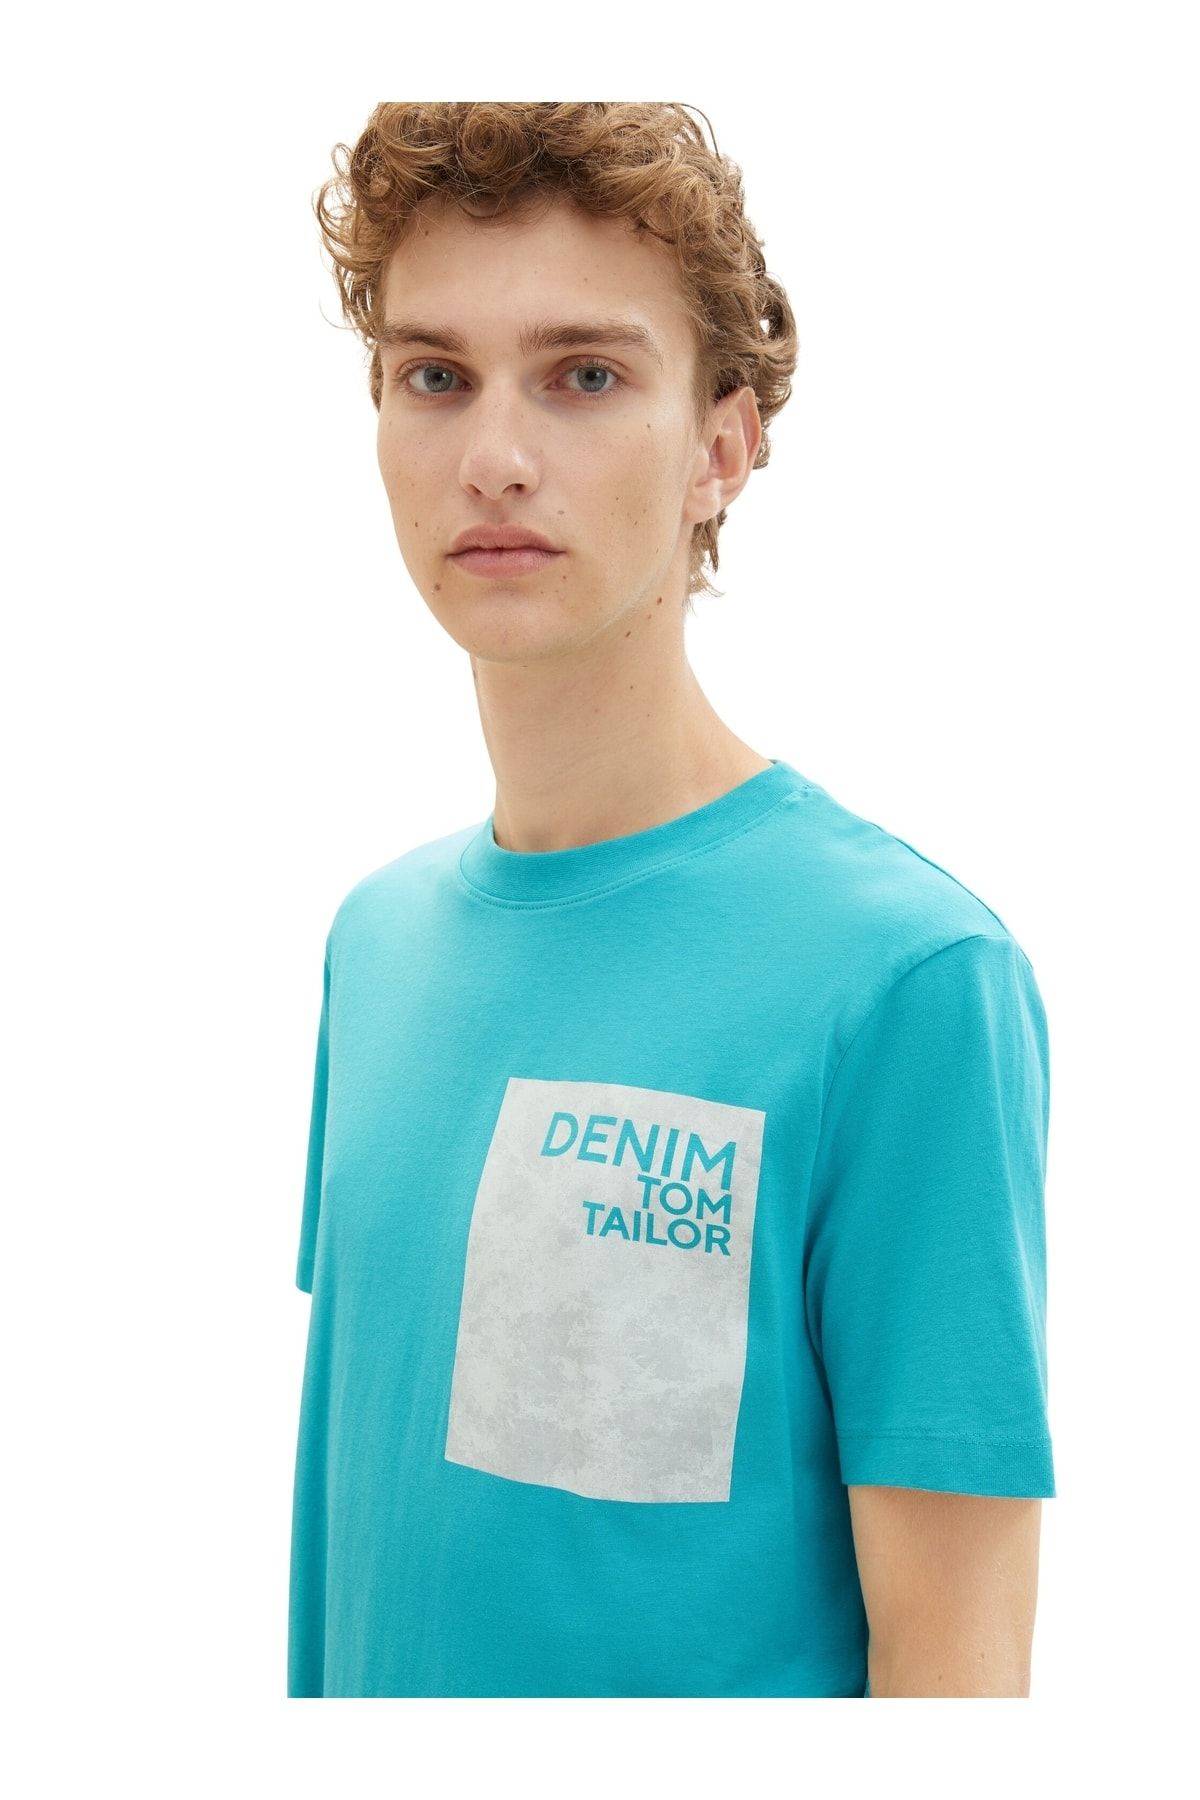 Tailor - Tom Denim - T-Shirt Blue - Trendyol Regular fit